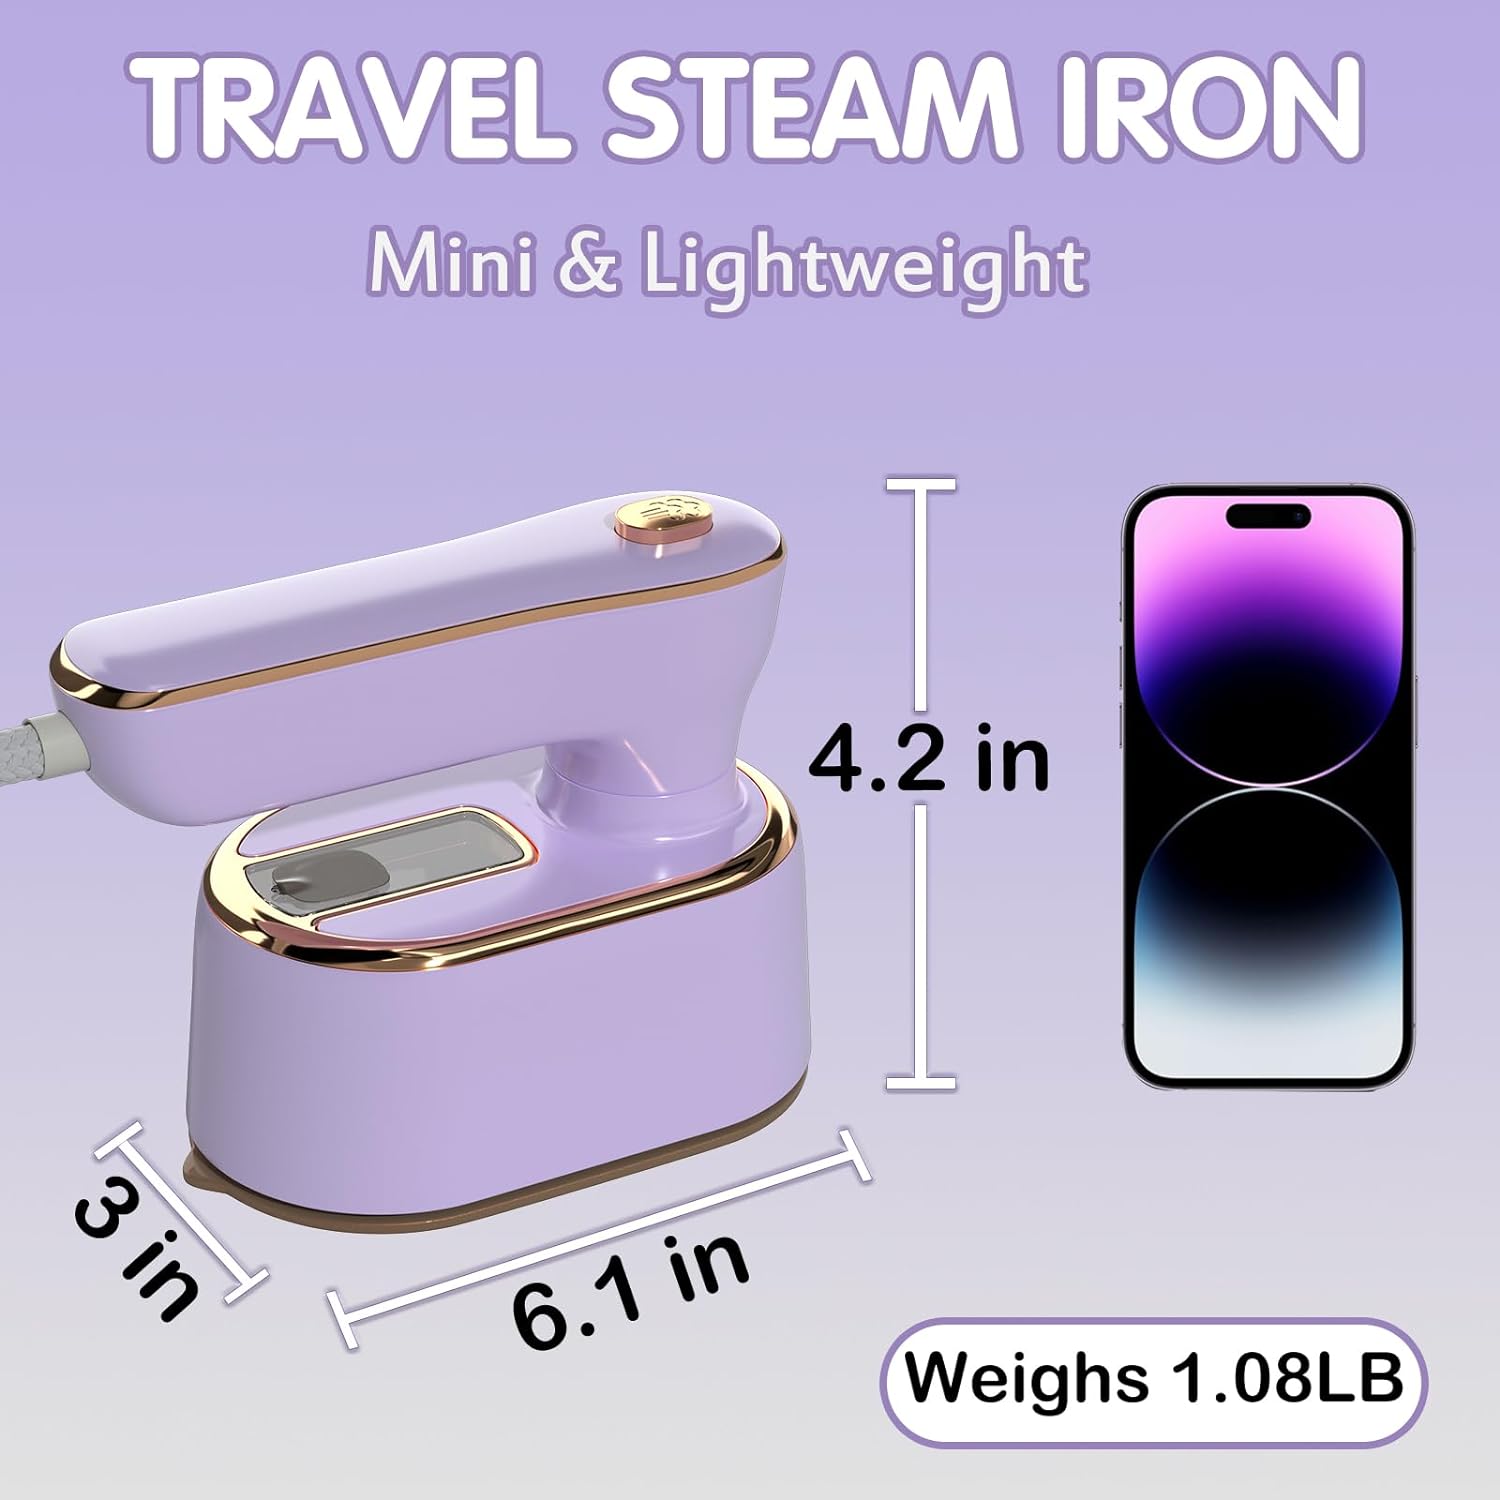 miniron™ - Mini Steam Iron